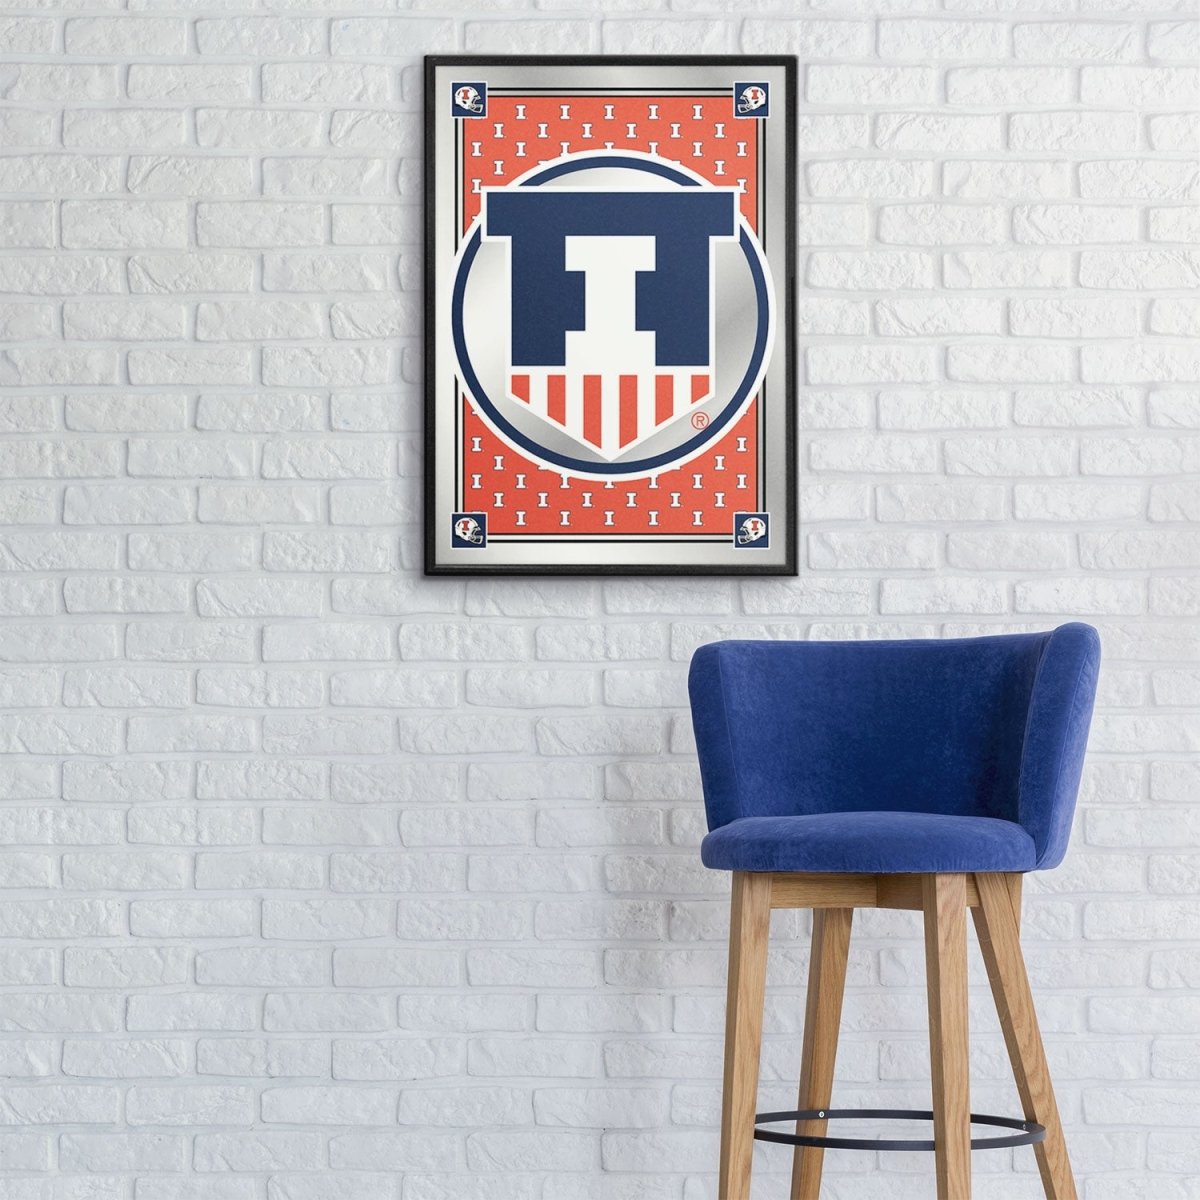 Illinois Fighting Illini: Team Spirit, Badge - Framed Mirrored Wall Sign - The Fan-Brand